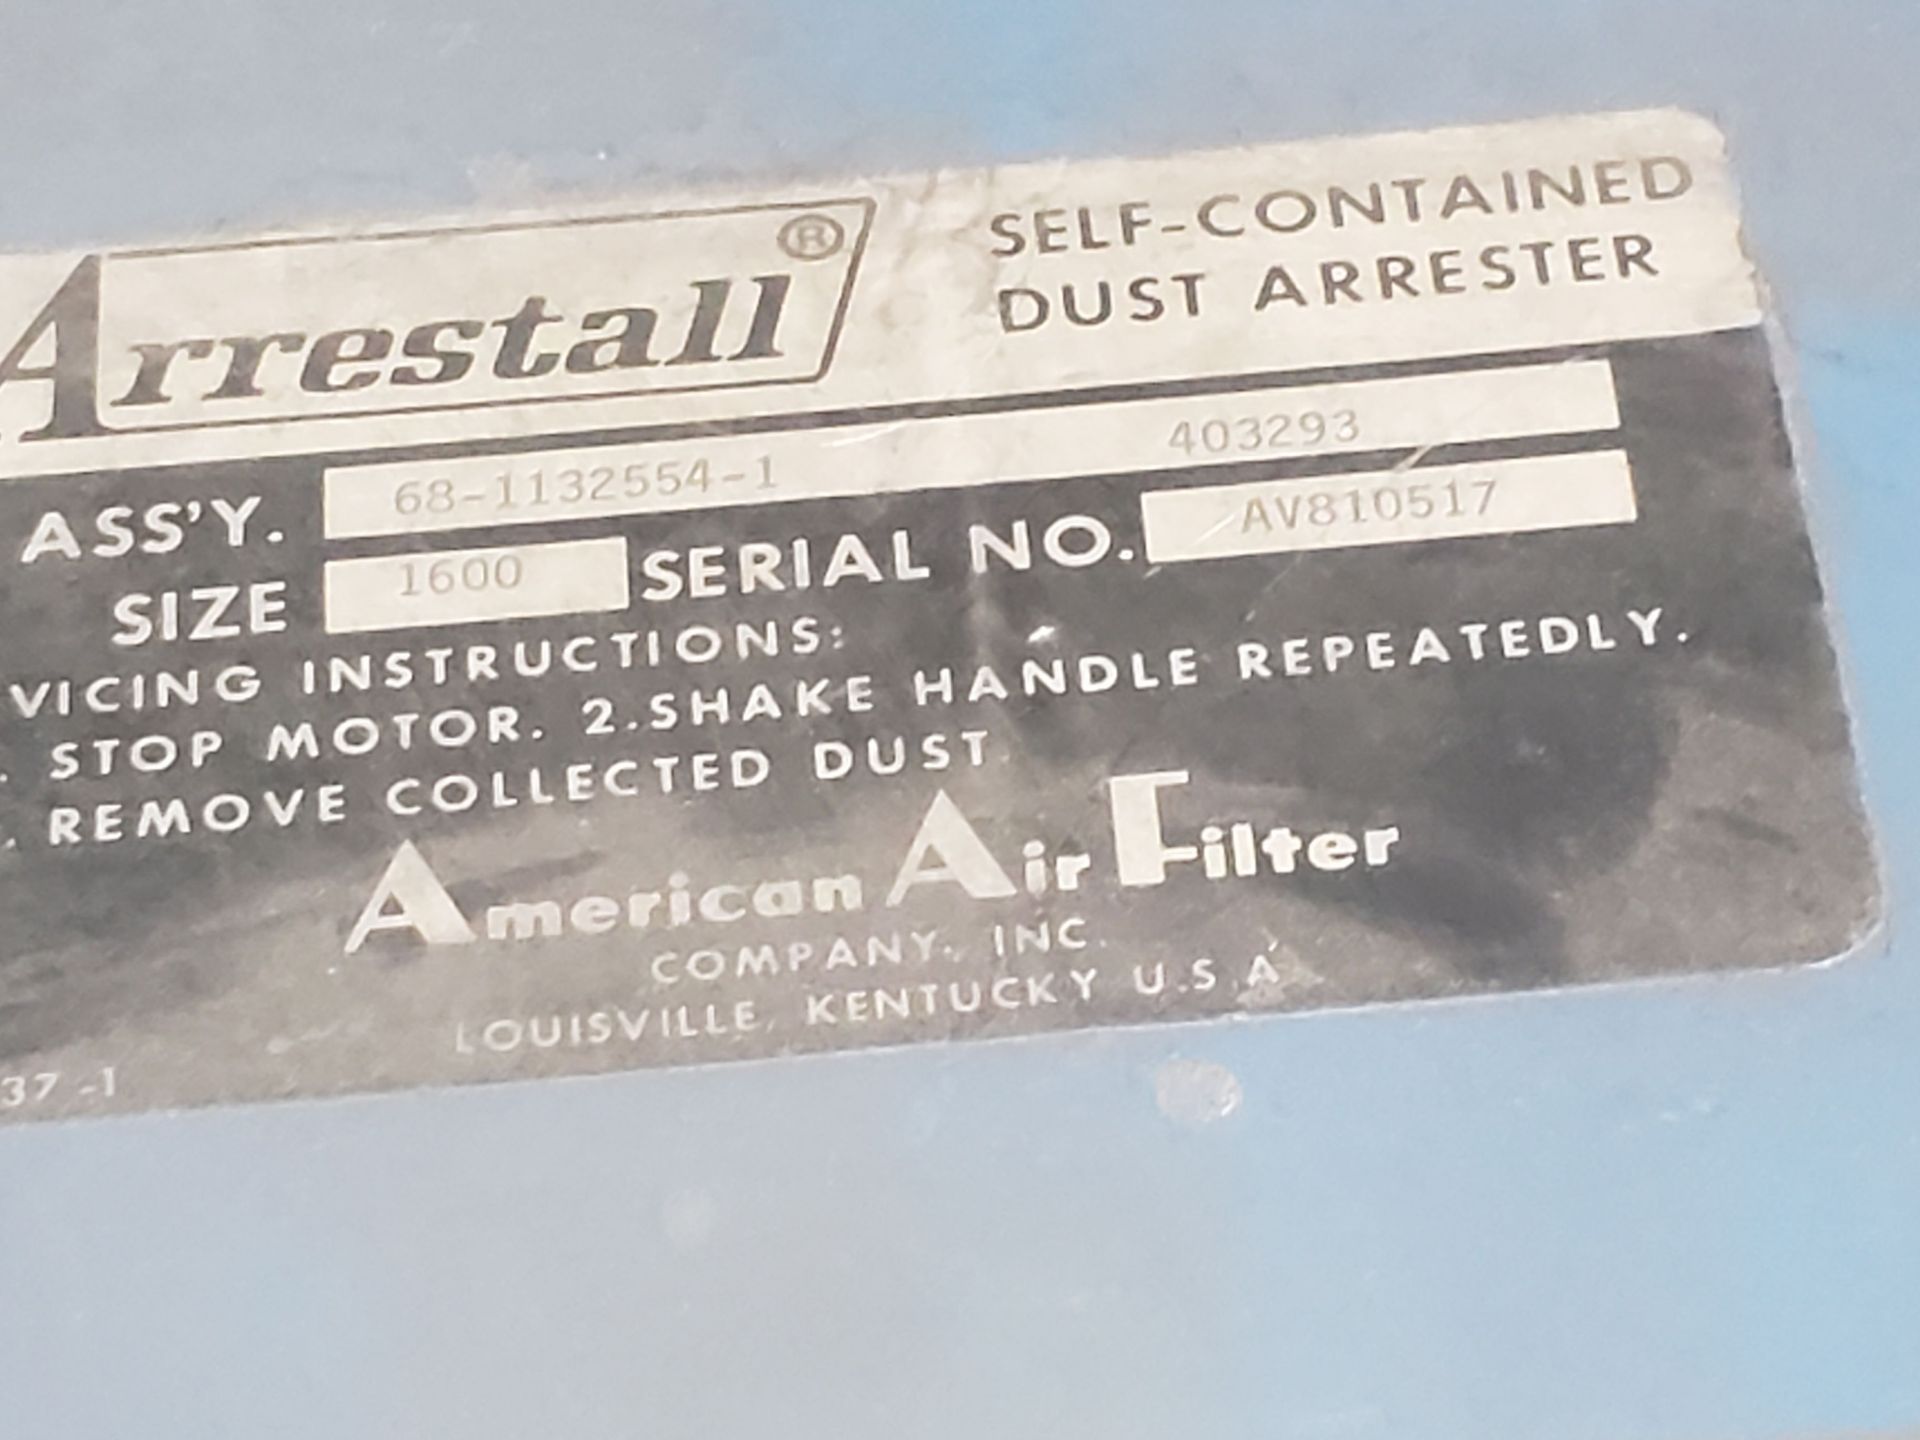 AMERICAN AIR FILTER ARRESTALL DUST COLLECTOR SIZE 1600, SN AV810517, ASSY NO 68-1132554-1 403293, - Image 2 of 2